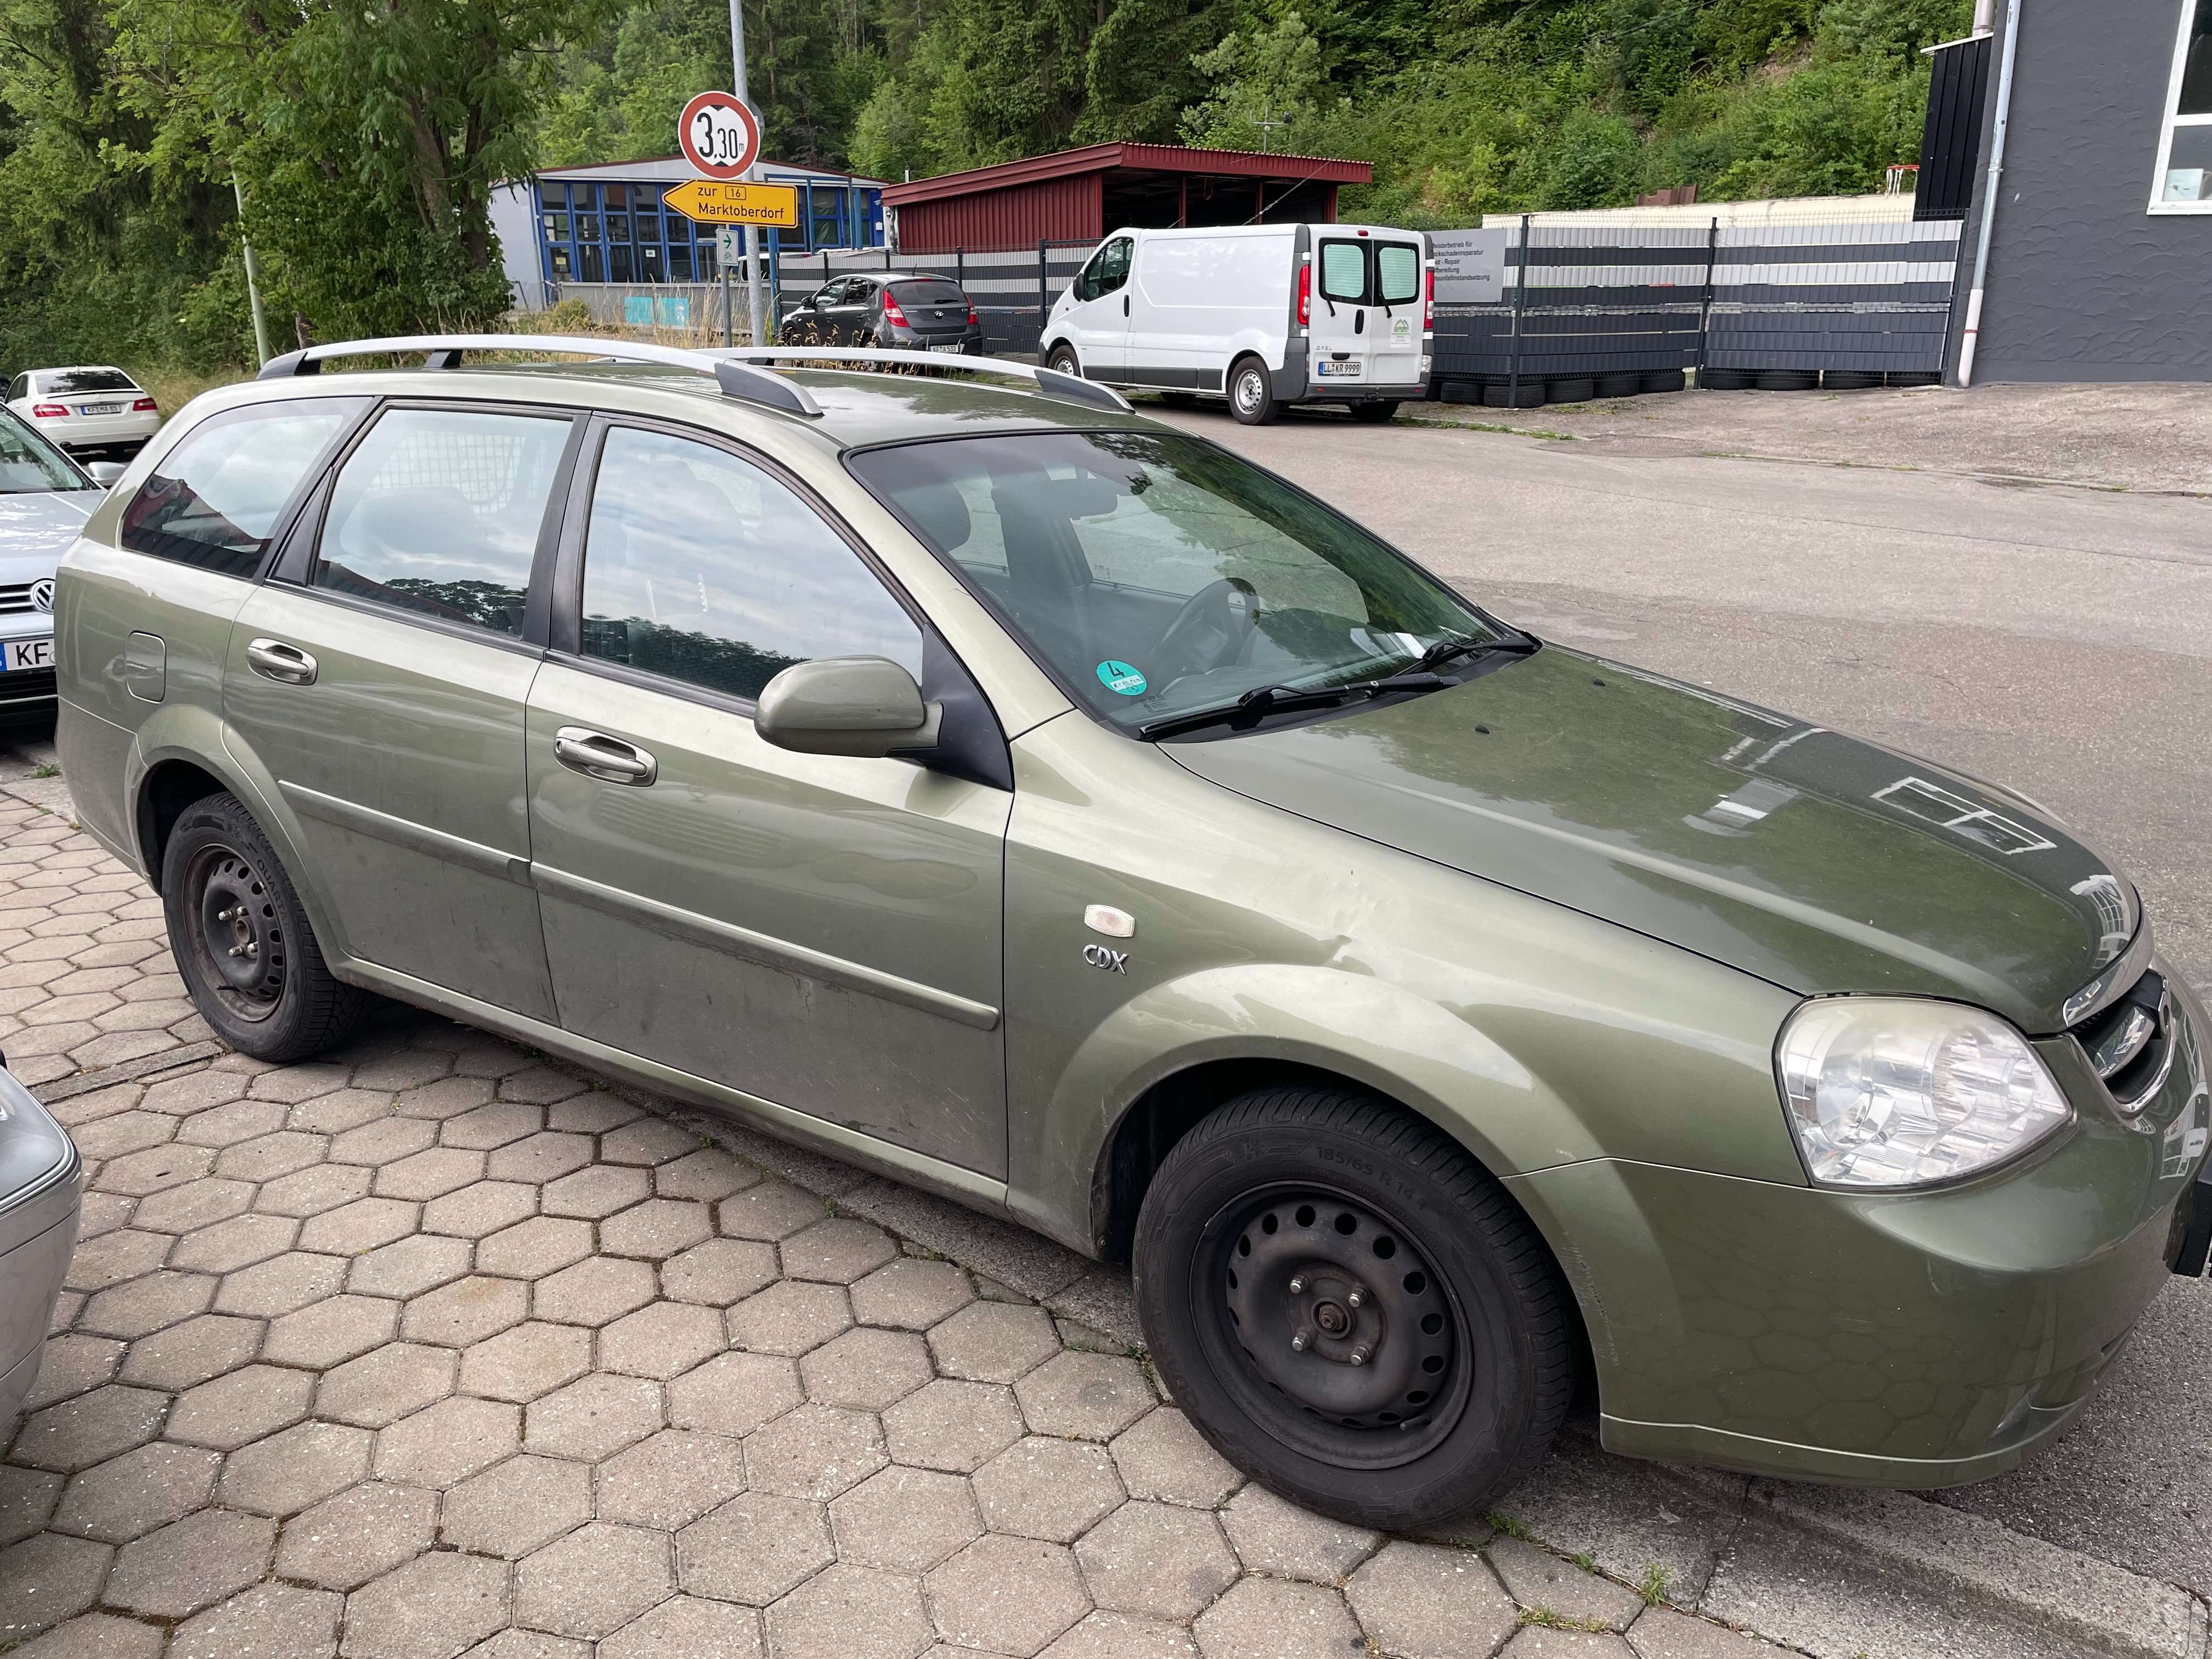 Daewoo Nubira Station wagon in Grey used in Kaufbeuren for € 750.-